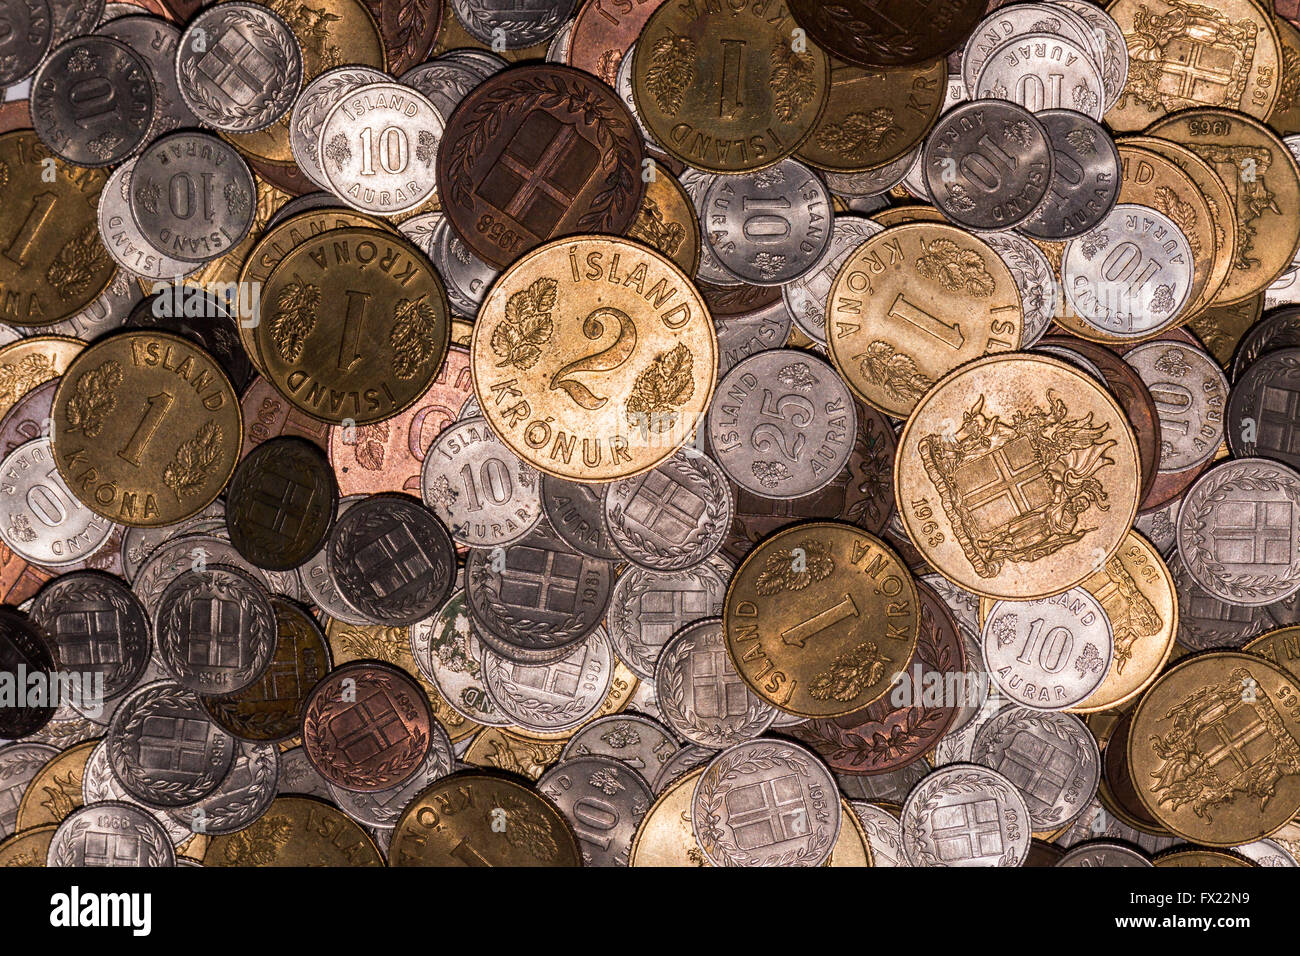 Vecchia moneta islandese (krona) Foto Stock